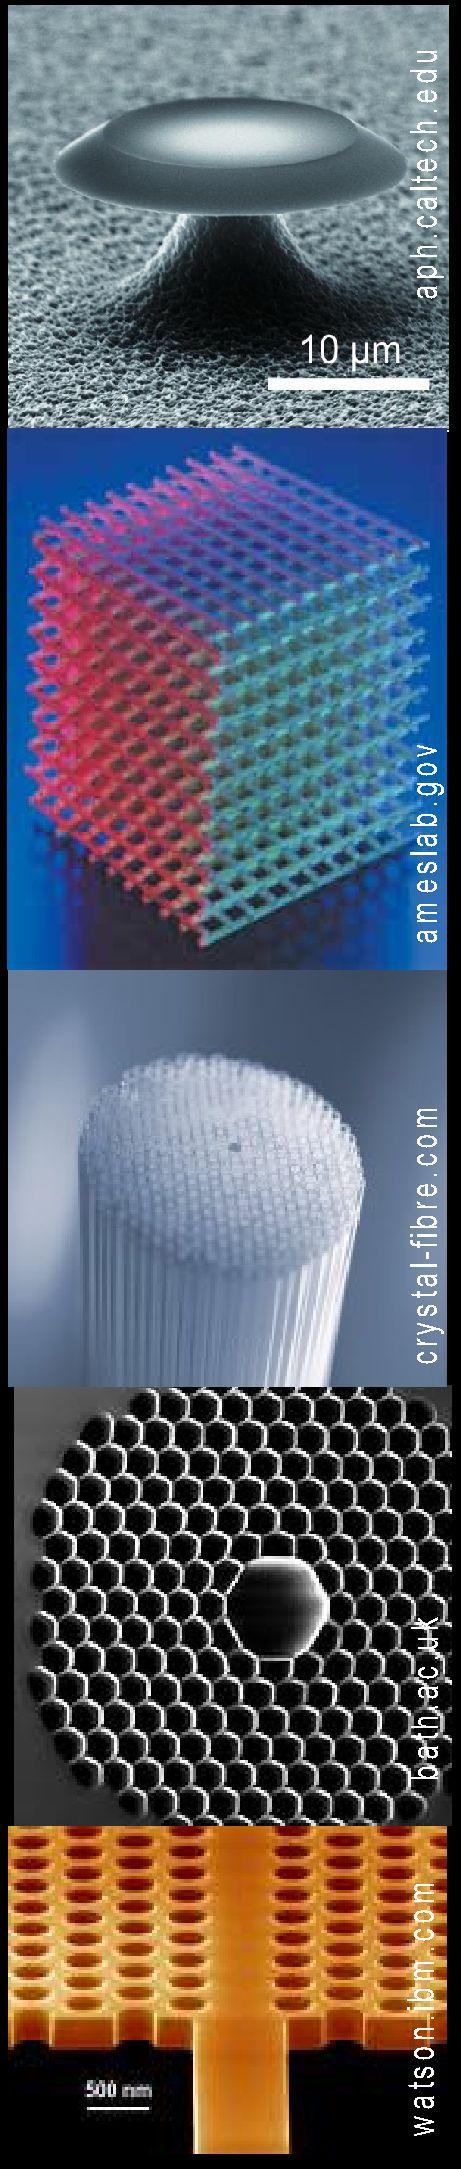 Microcavità, - Cristalli fotonici - Metamateriali Obiettivi: -